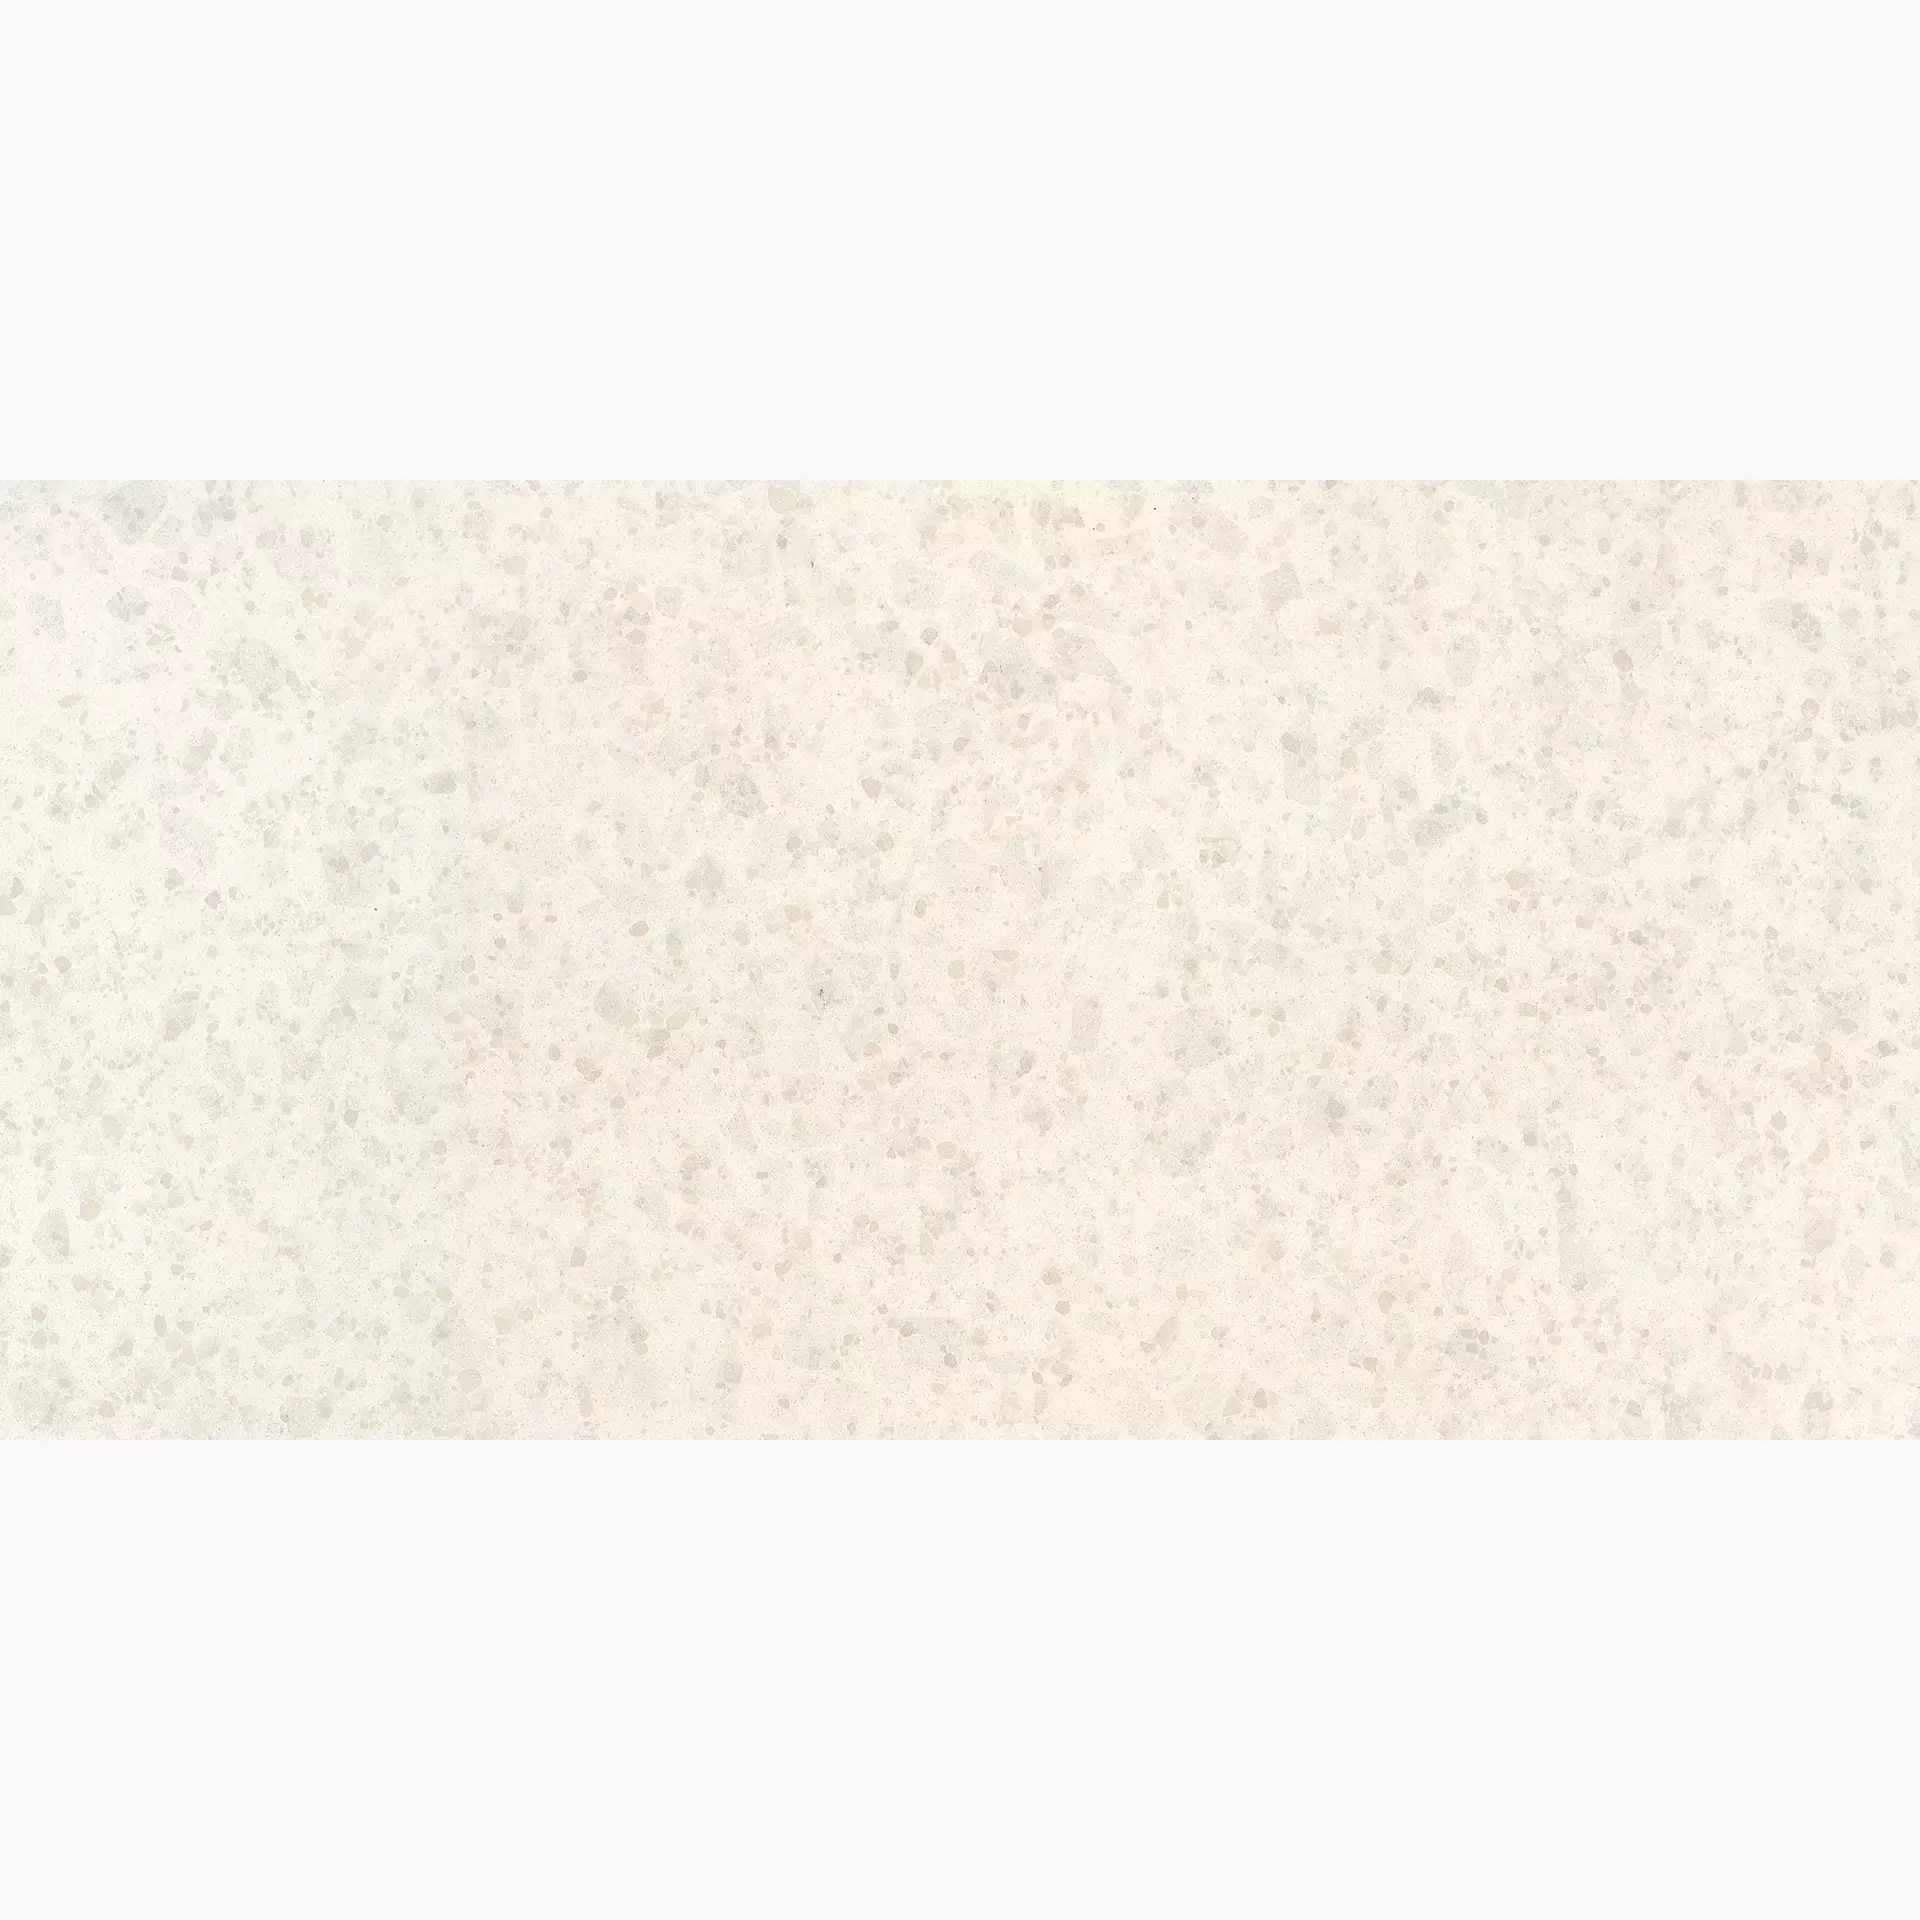 Gigacer Inclusioni Soave Bianco Perla Matt Bianco Perla 12INCL60120BIAPERMAT matt 60x120cm 12mm